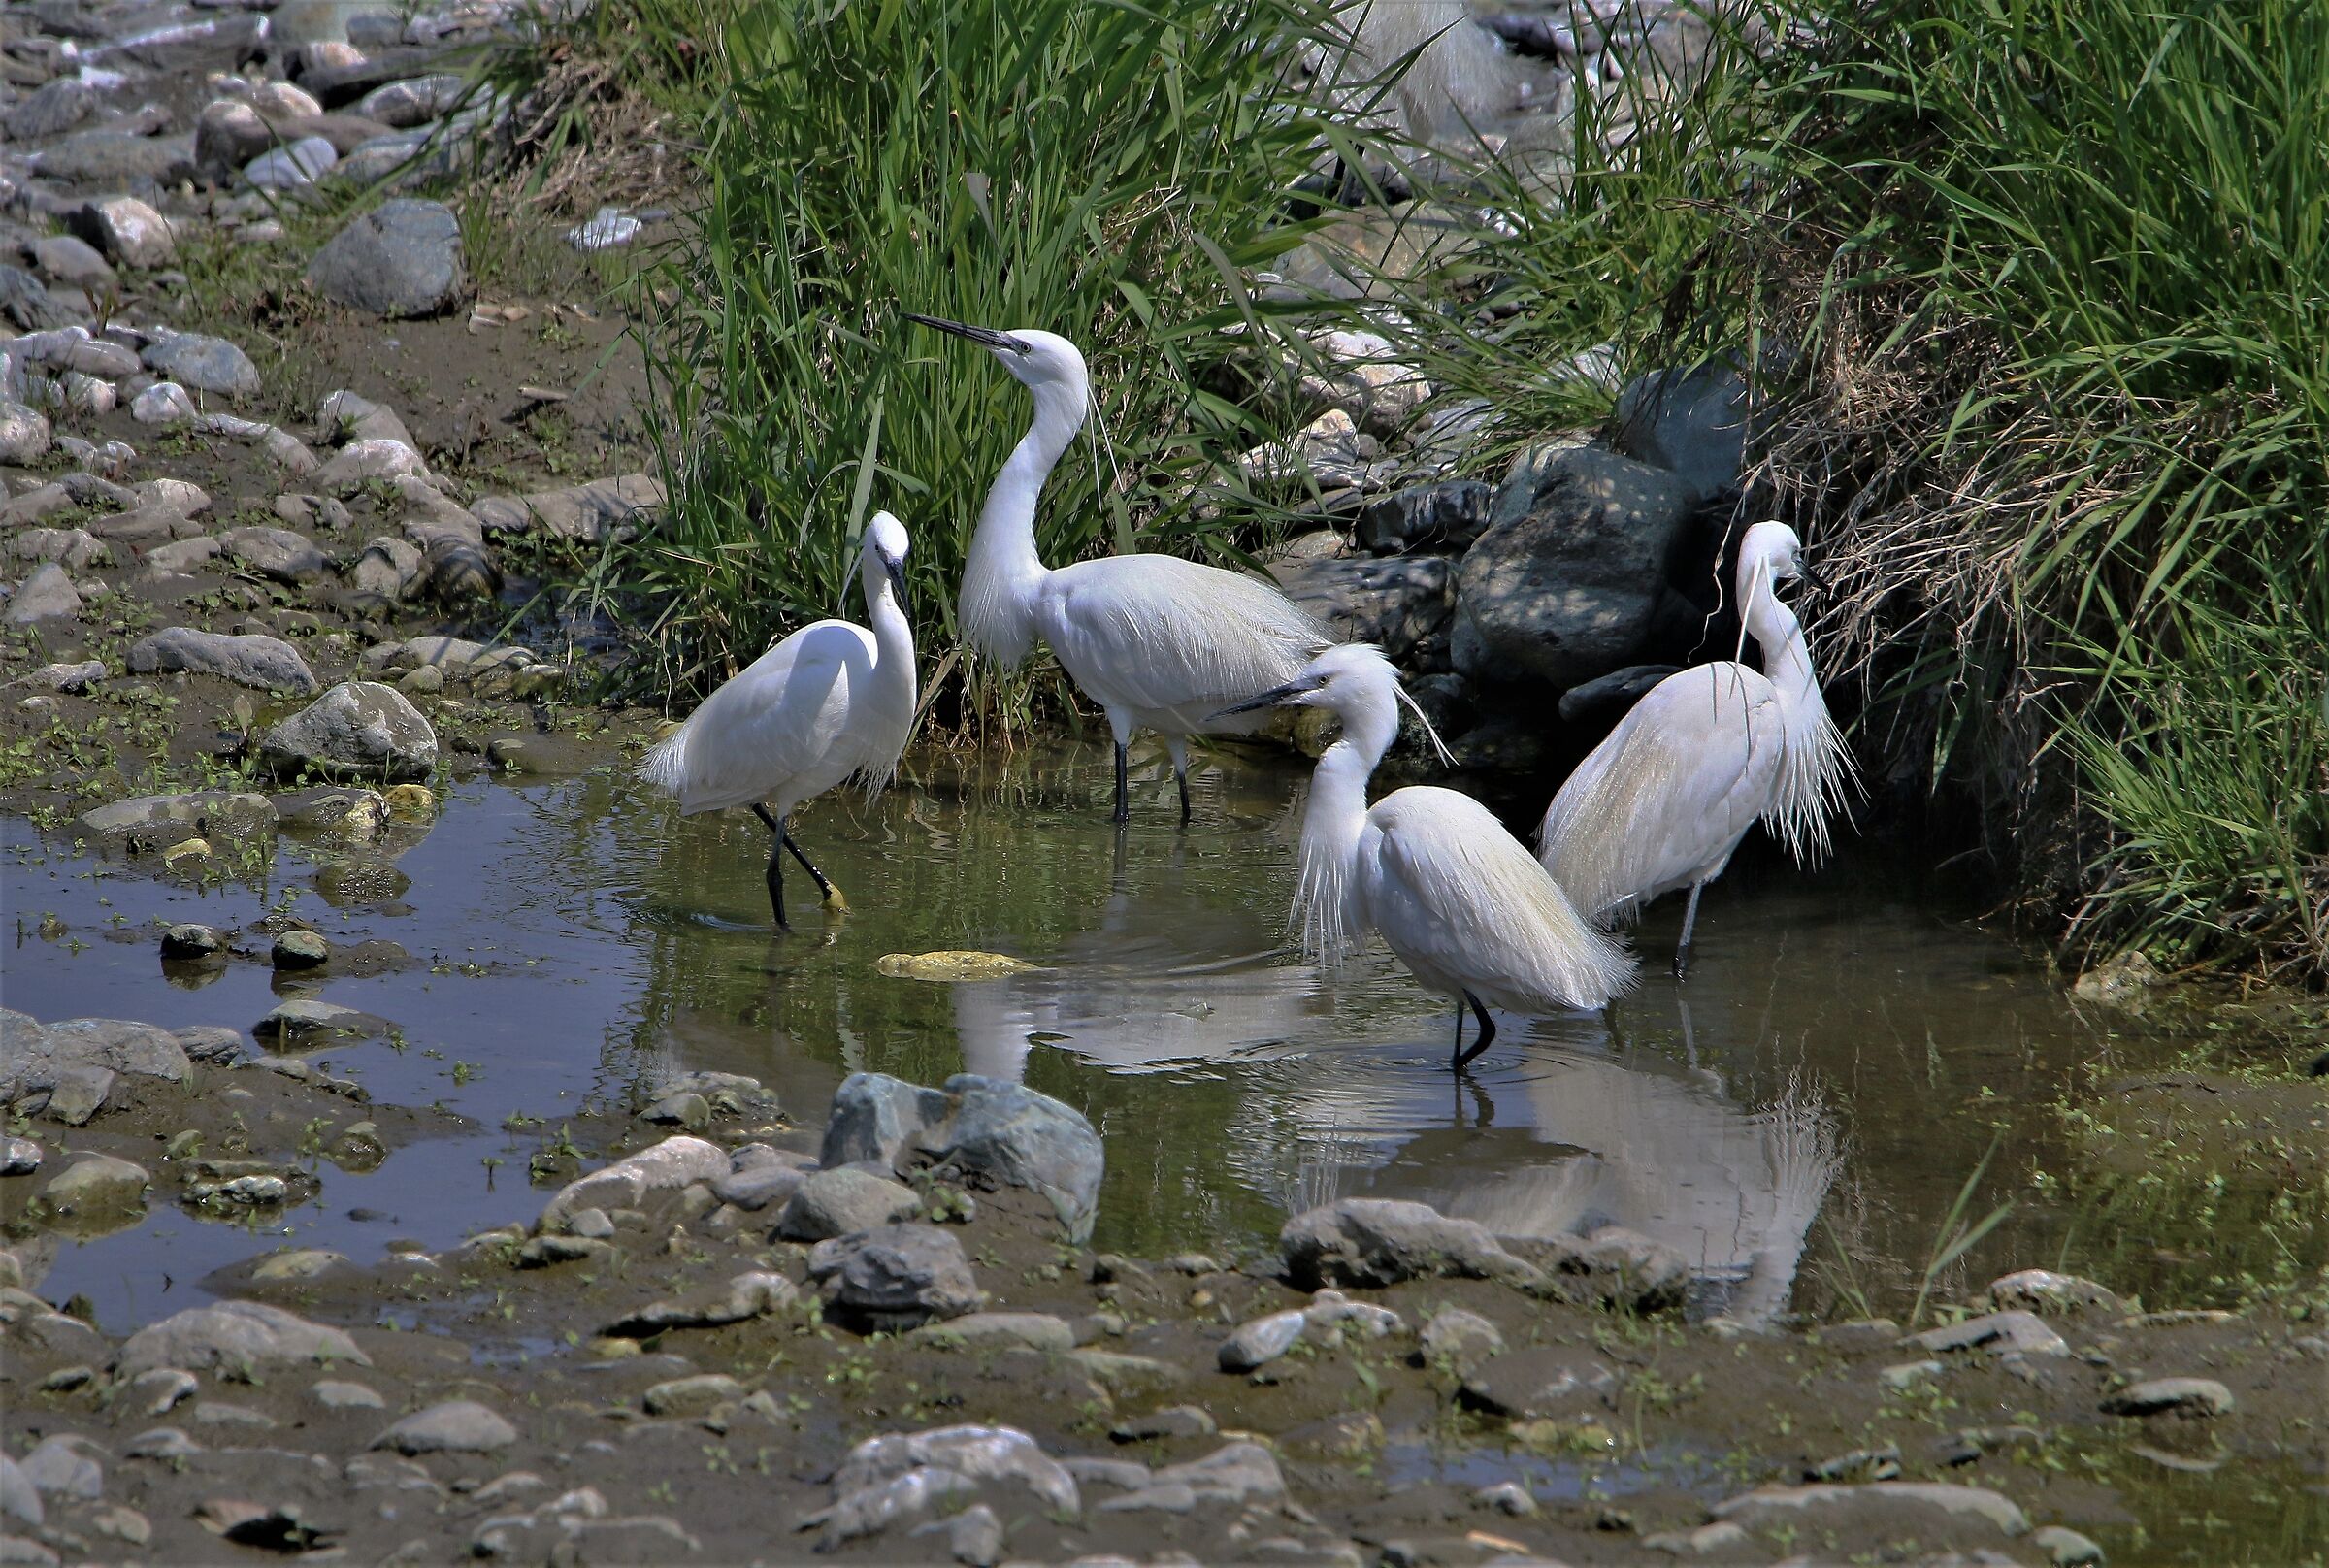 The pool of egrets...